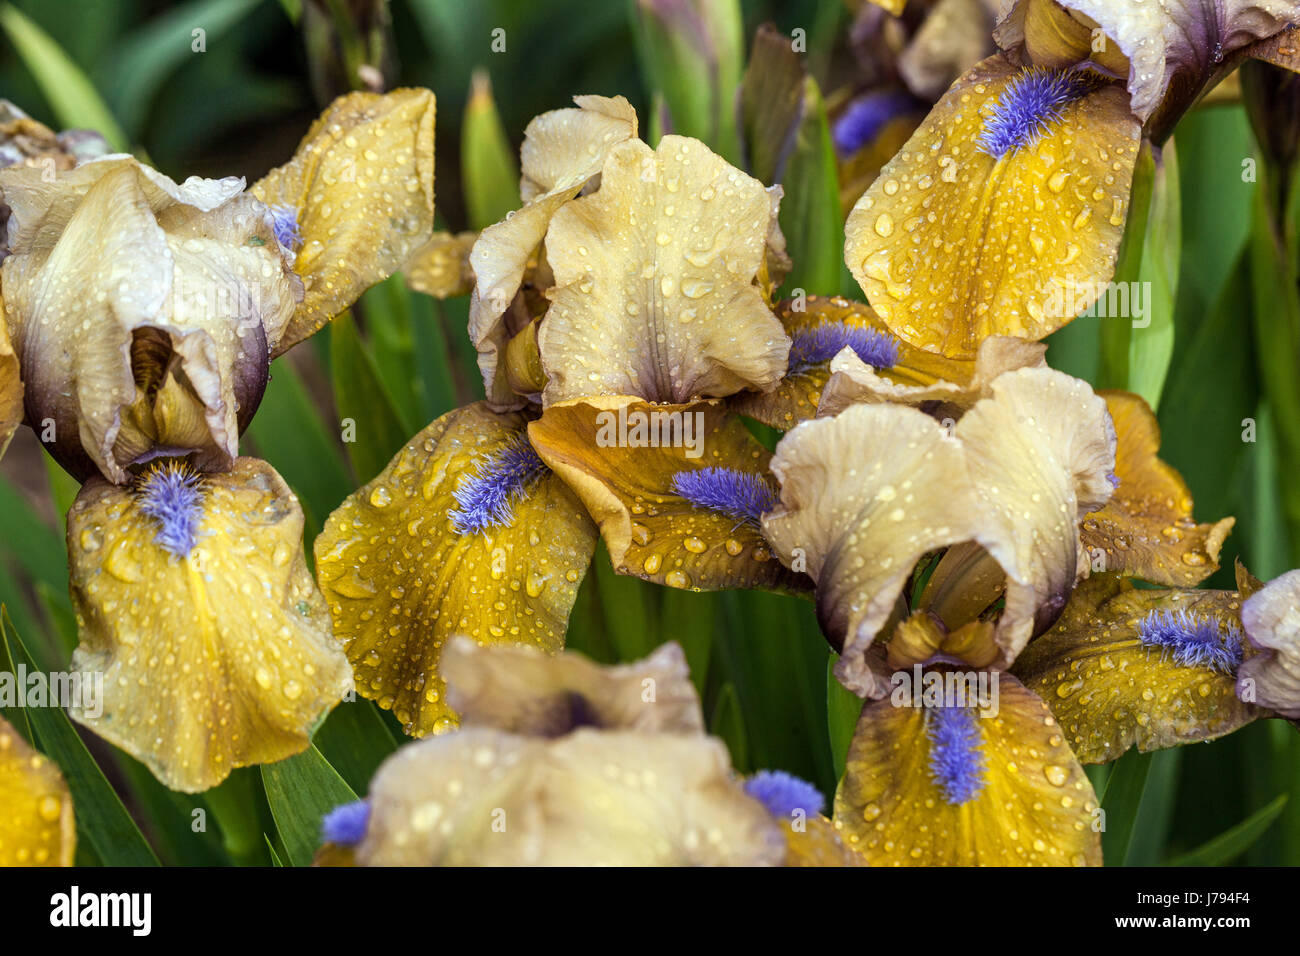 Iris barbata nana 'Gingerbread Man'', Iris flower yellow Standard Dwarf Bearded Iris drops on flags Stock Photo